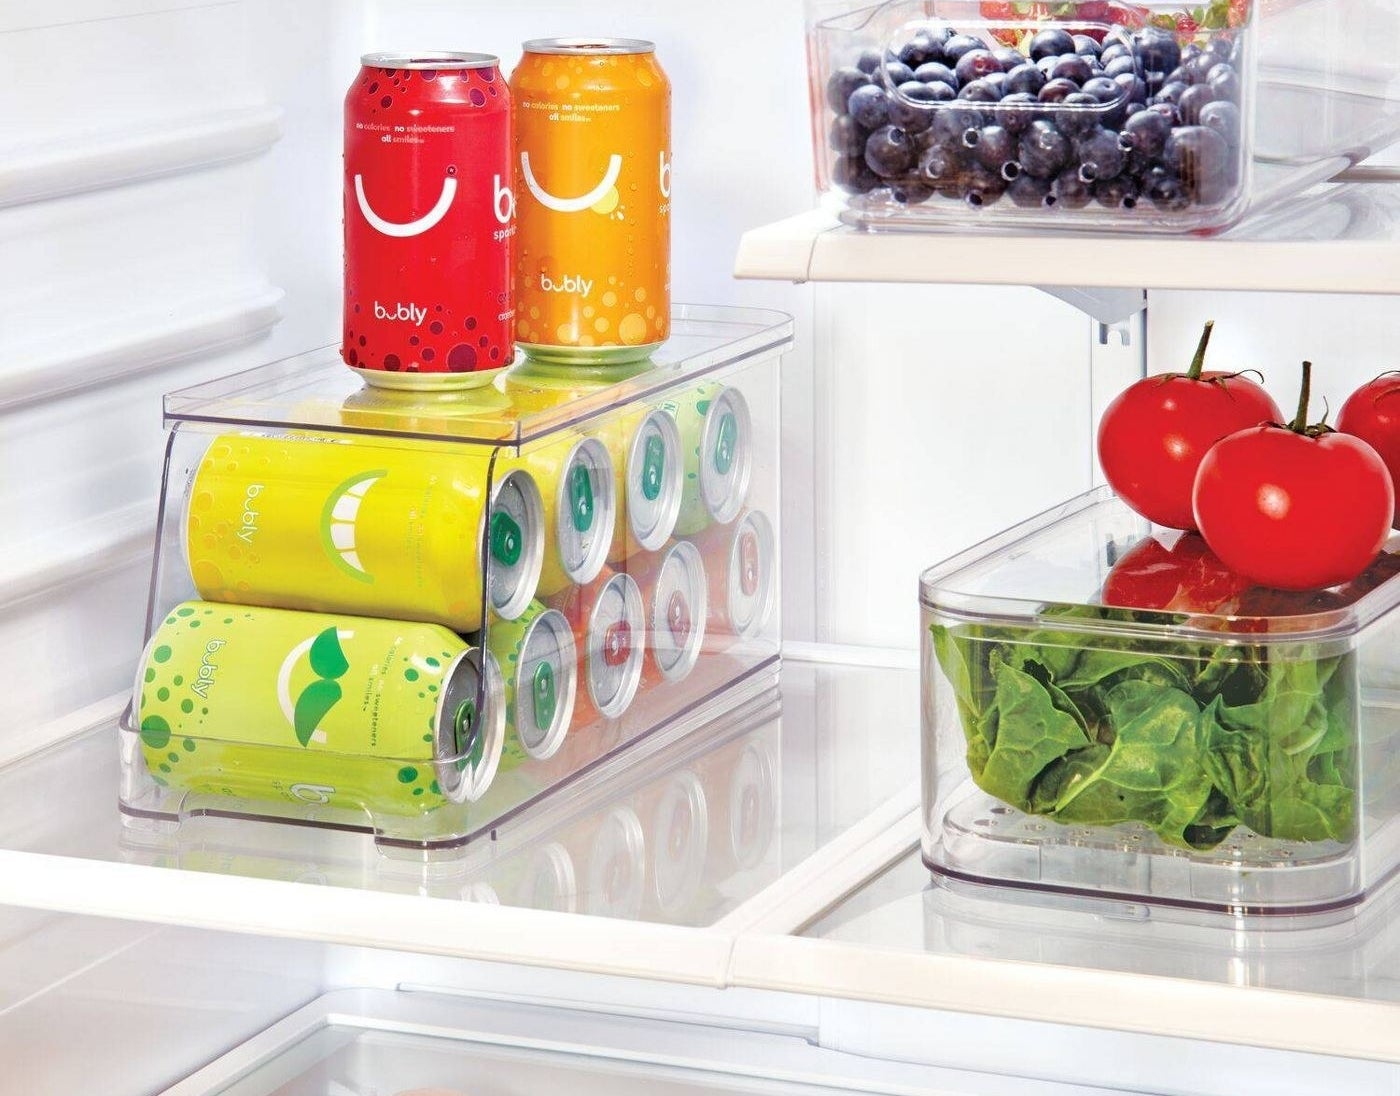 a refrigerator with a soda organizer and sodas inside